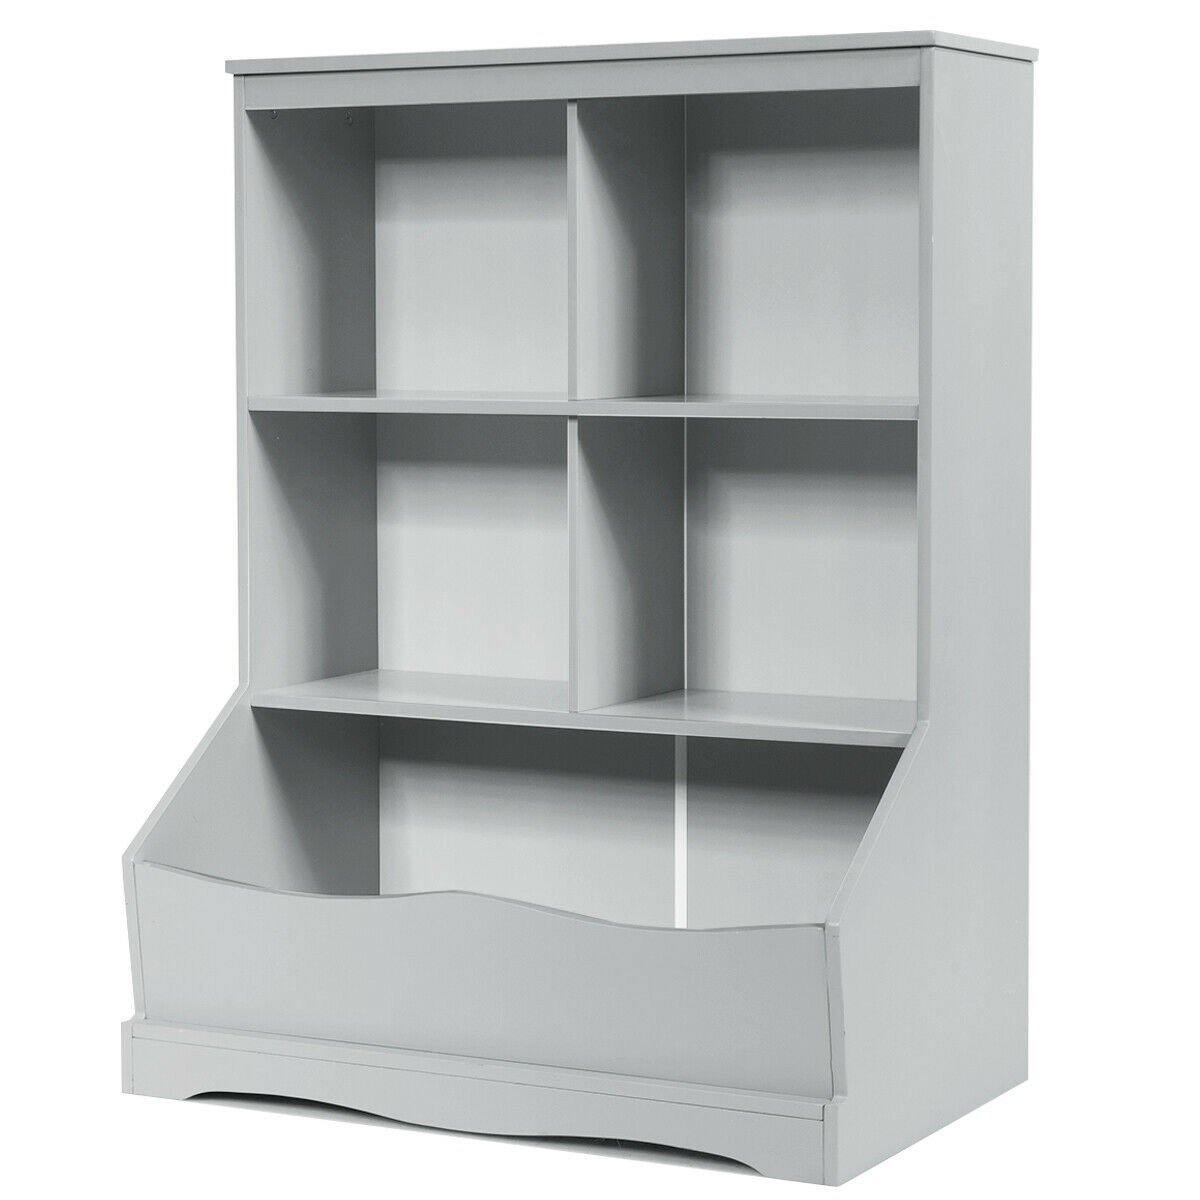 3 Shelf 4 Cube Units, Storage Bins Cubbies for Kids????? Collections - Giantexus